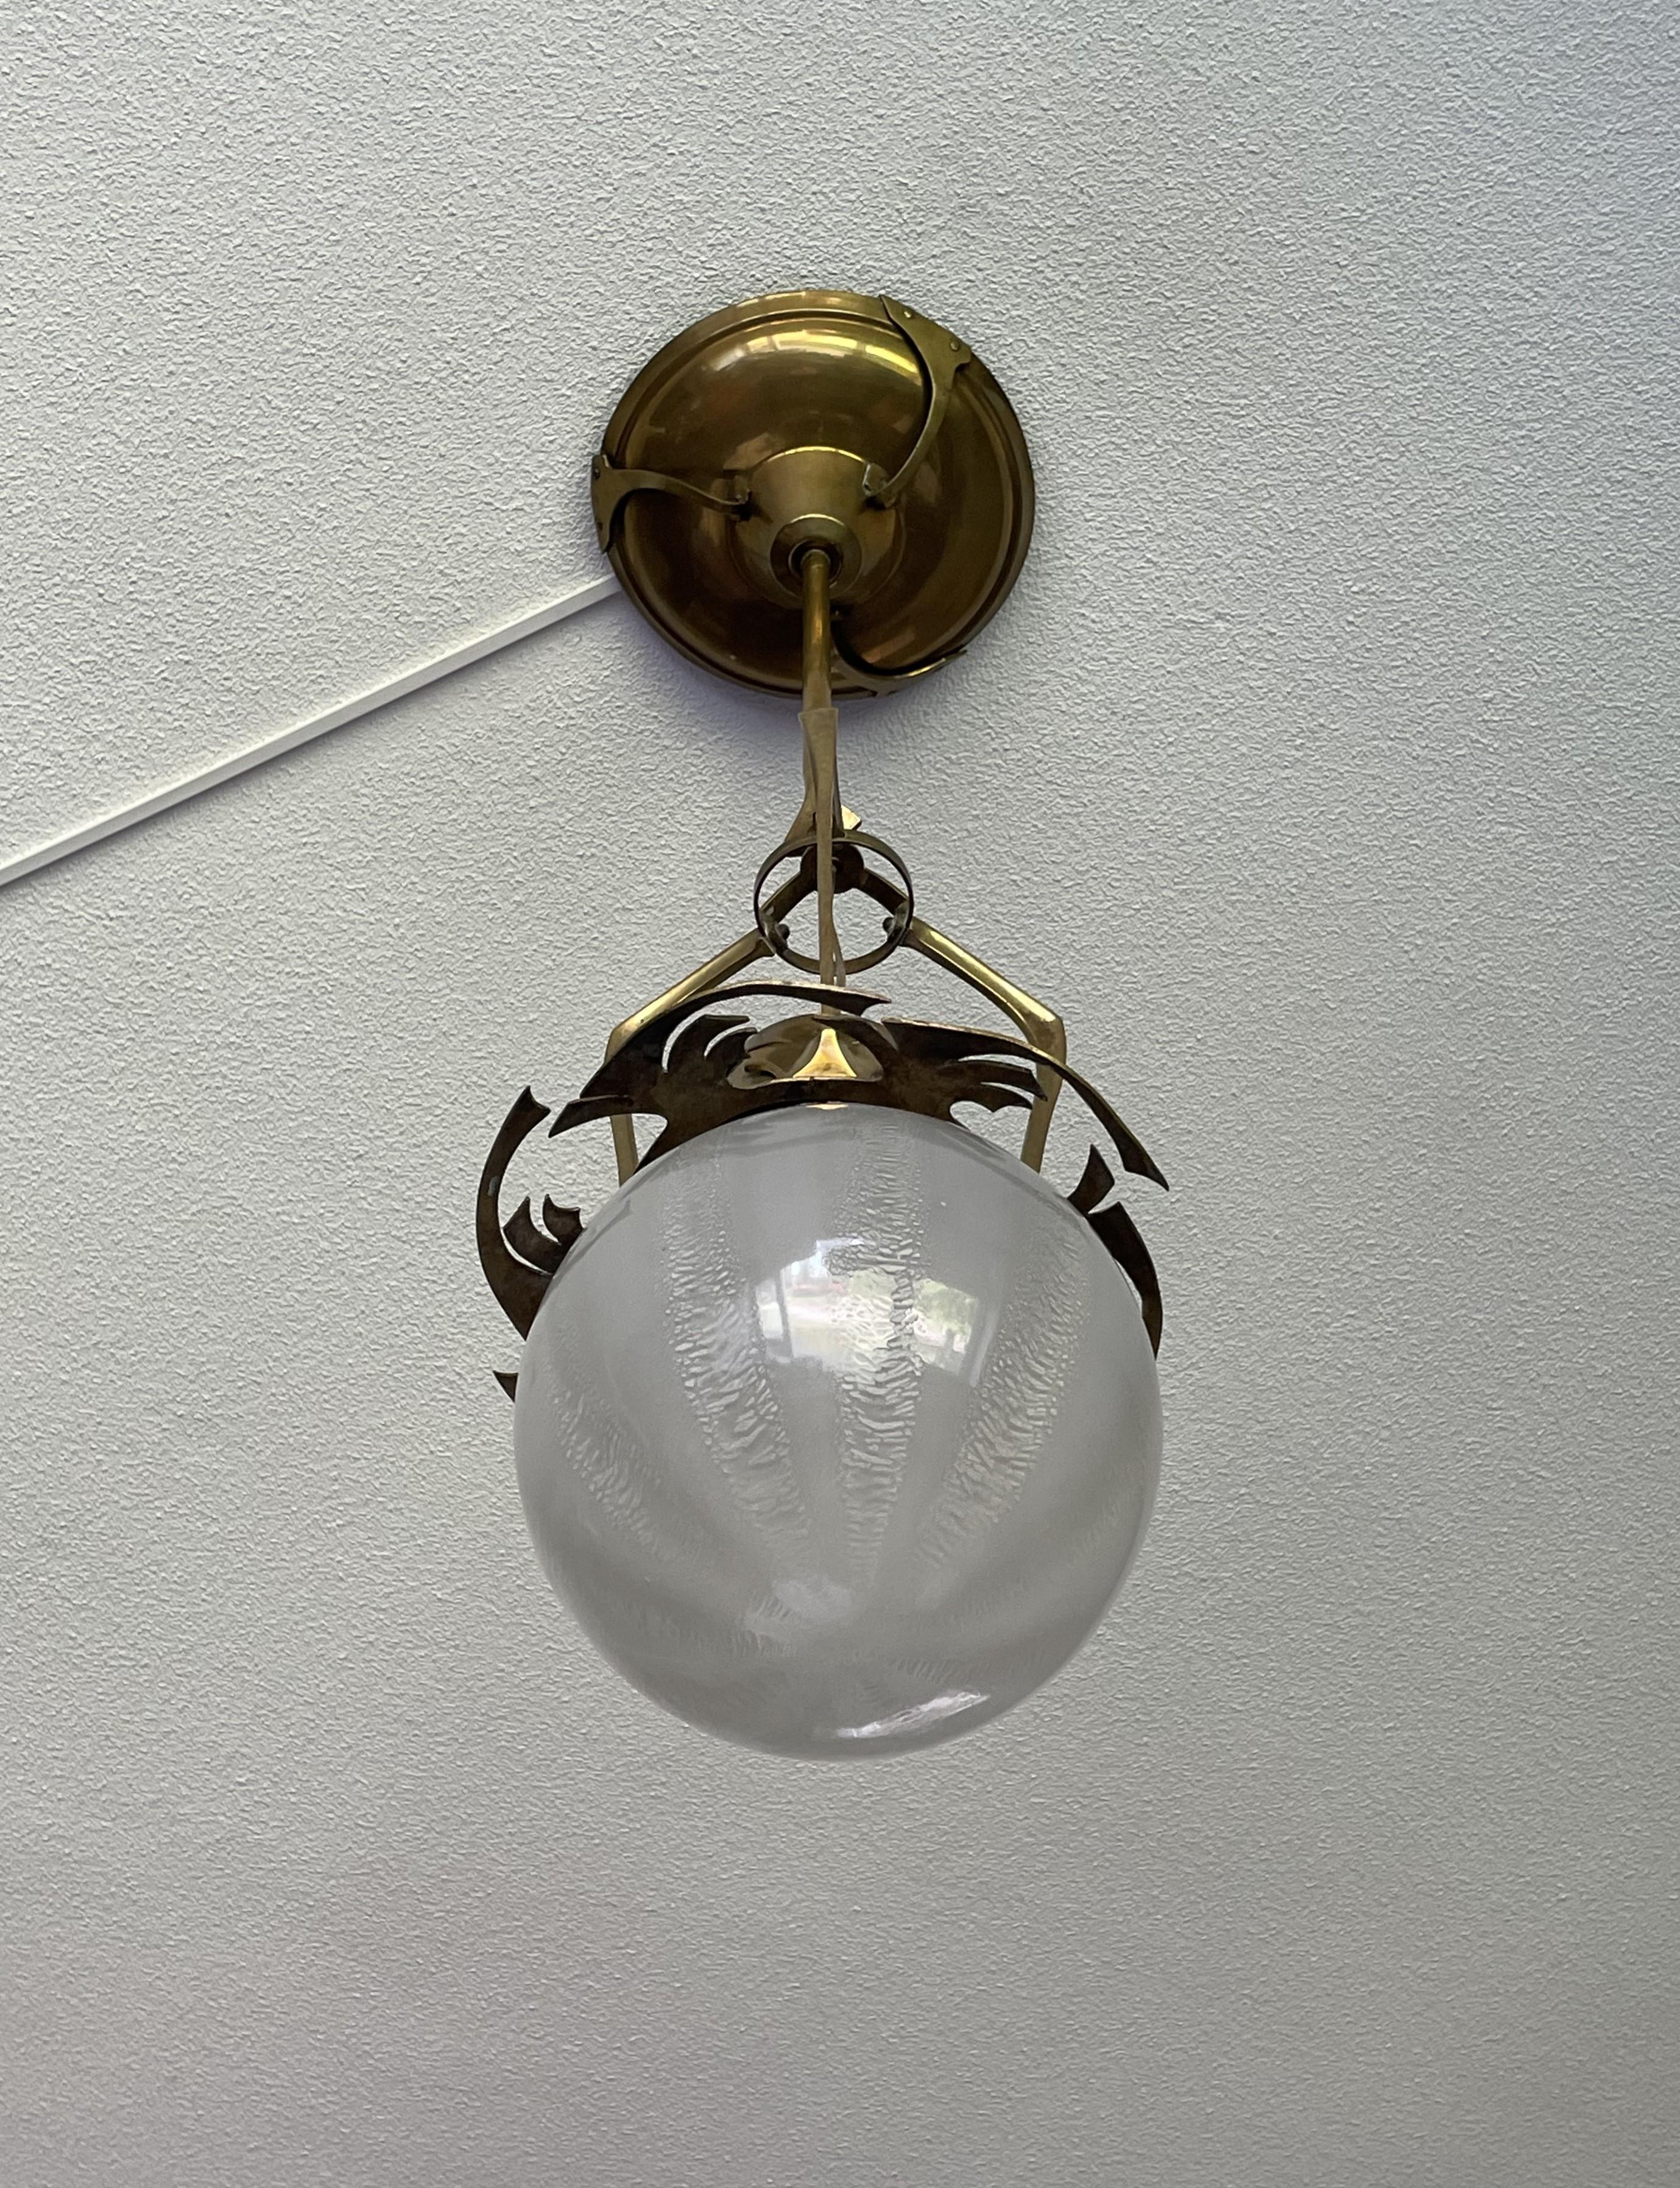 Cast Unique Dutch Arts & Crafts Brass Pendant Light With Rare Tin Crackle Globe Shade For Sale